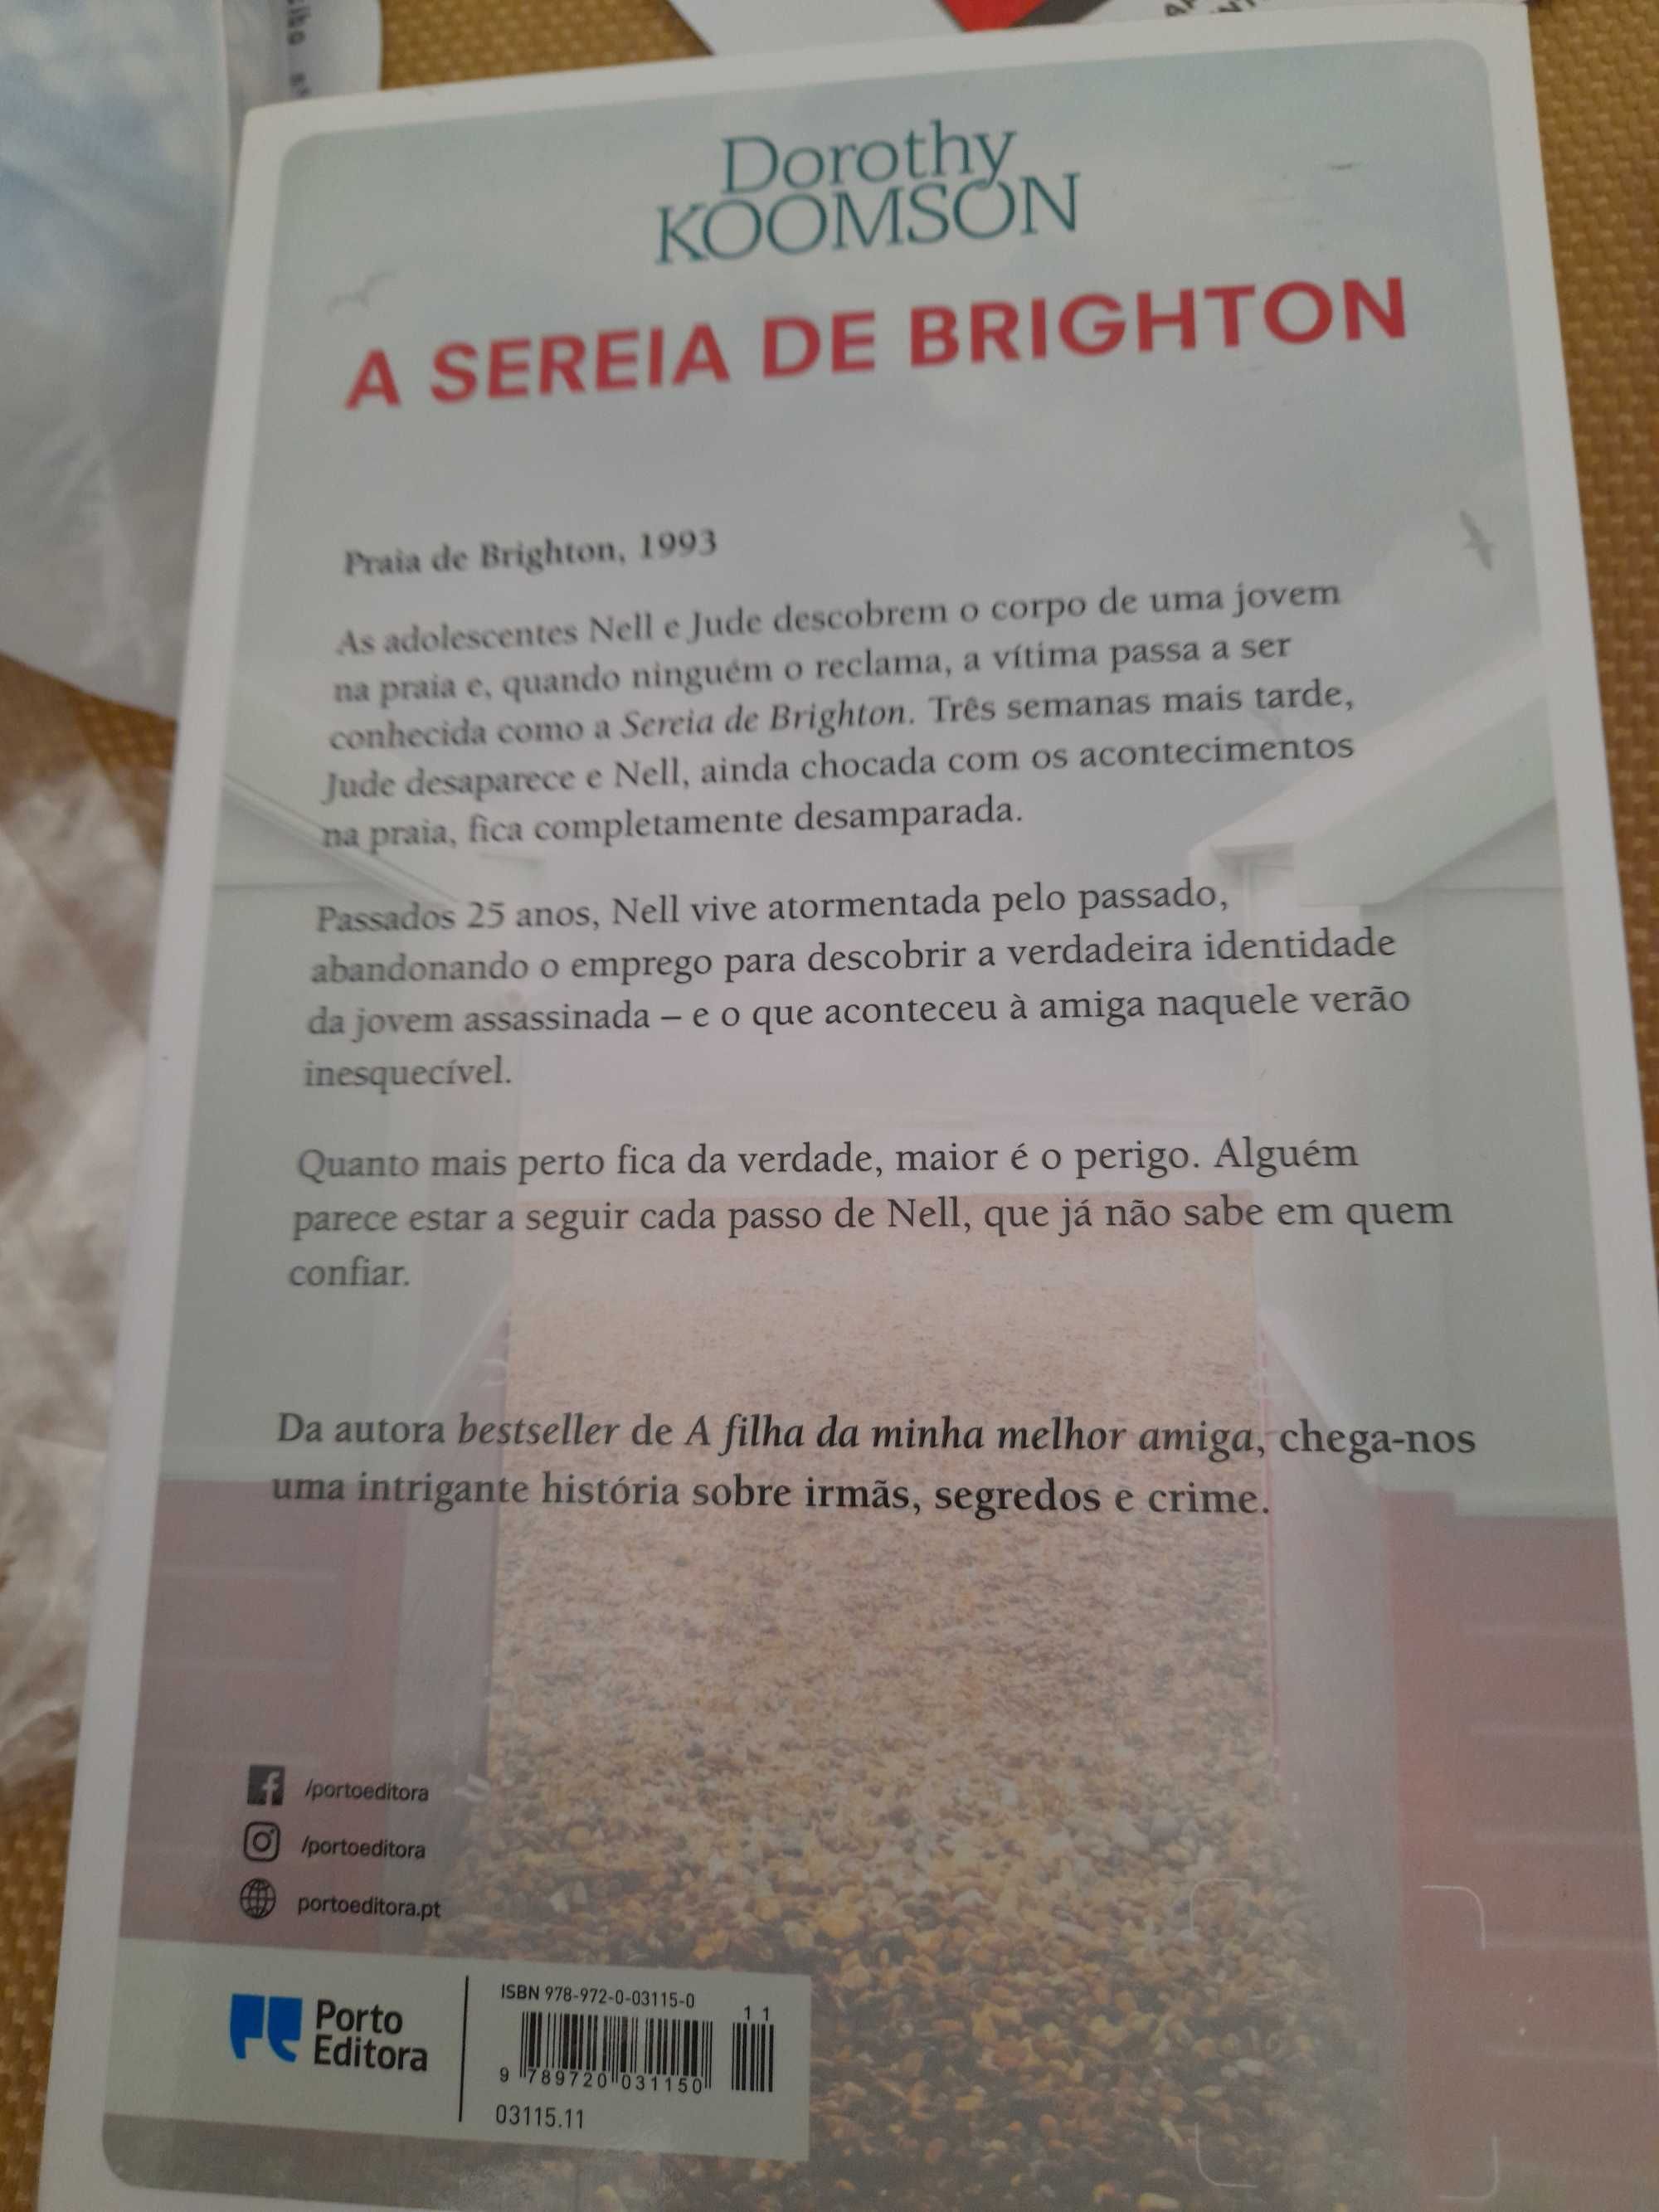 Livro "A sereia de Brighton "